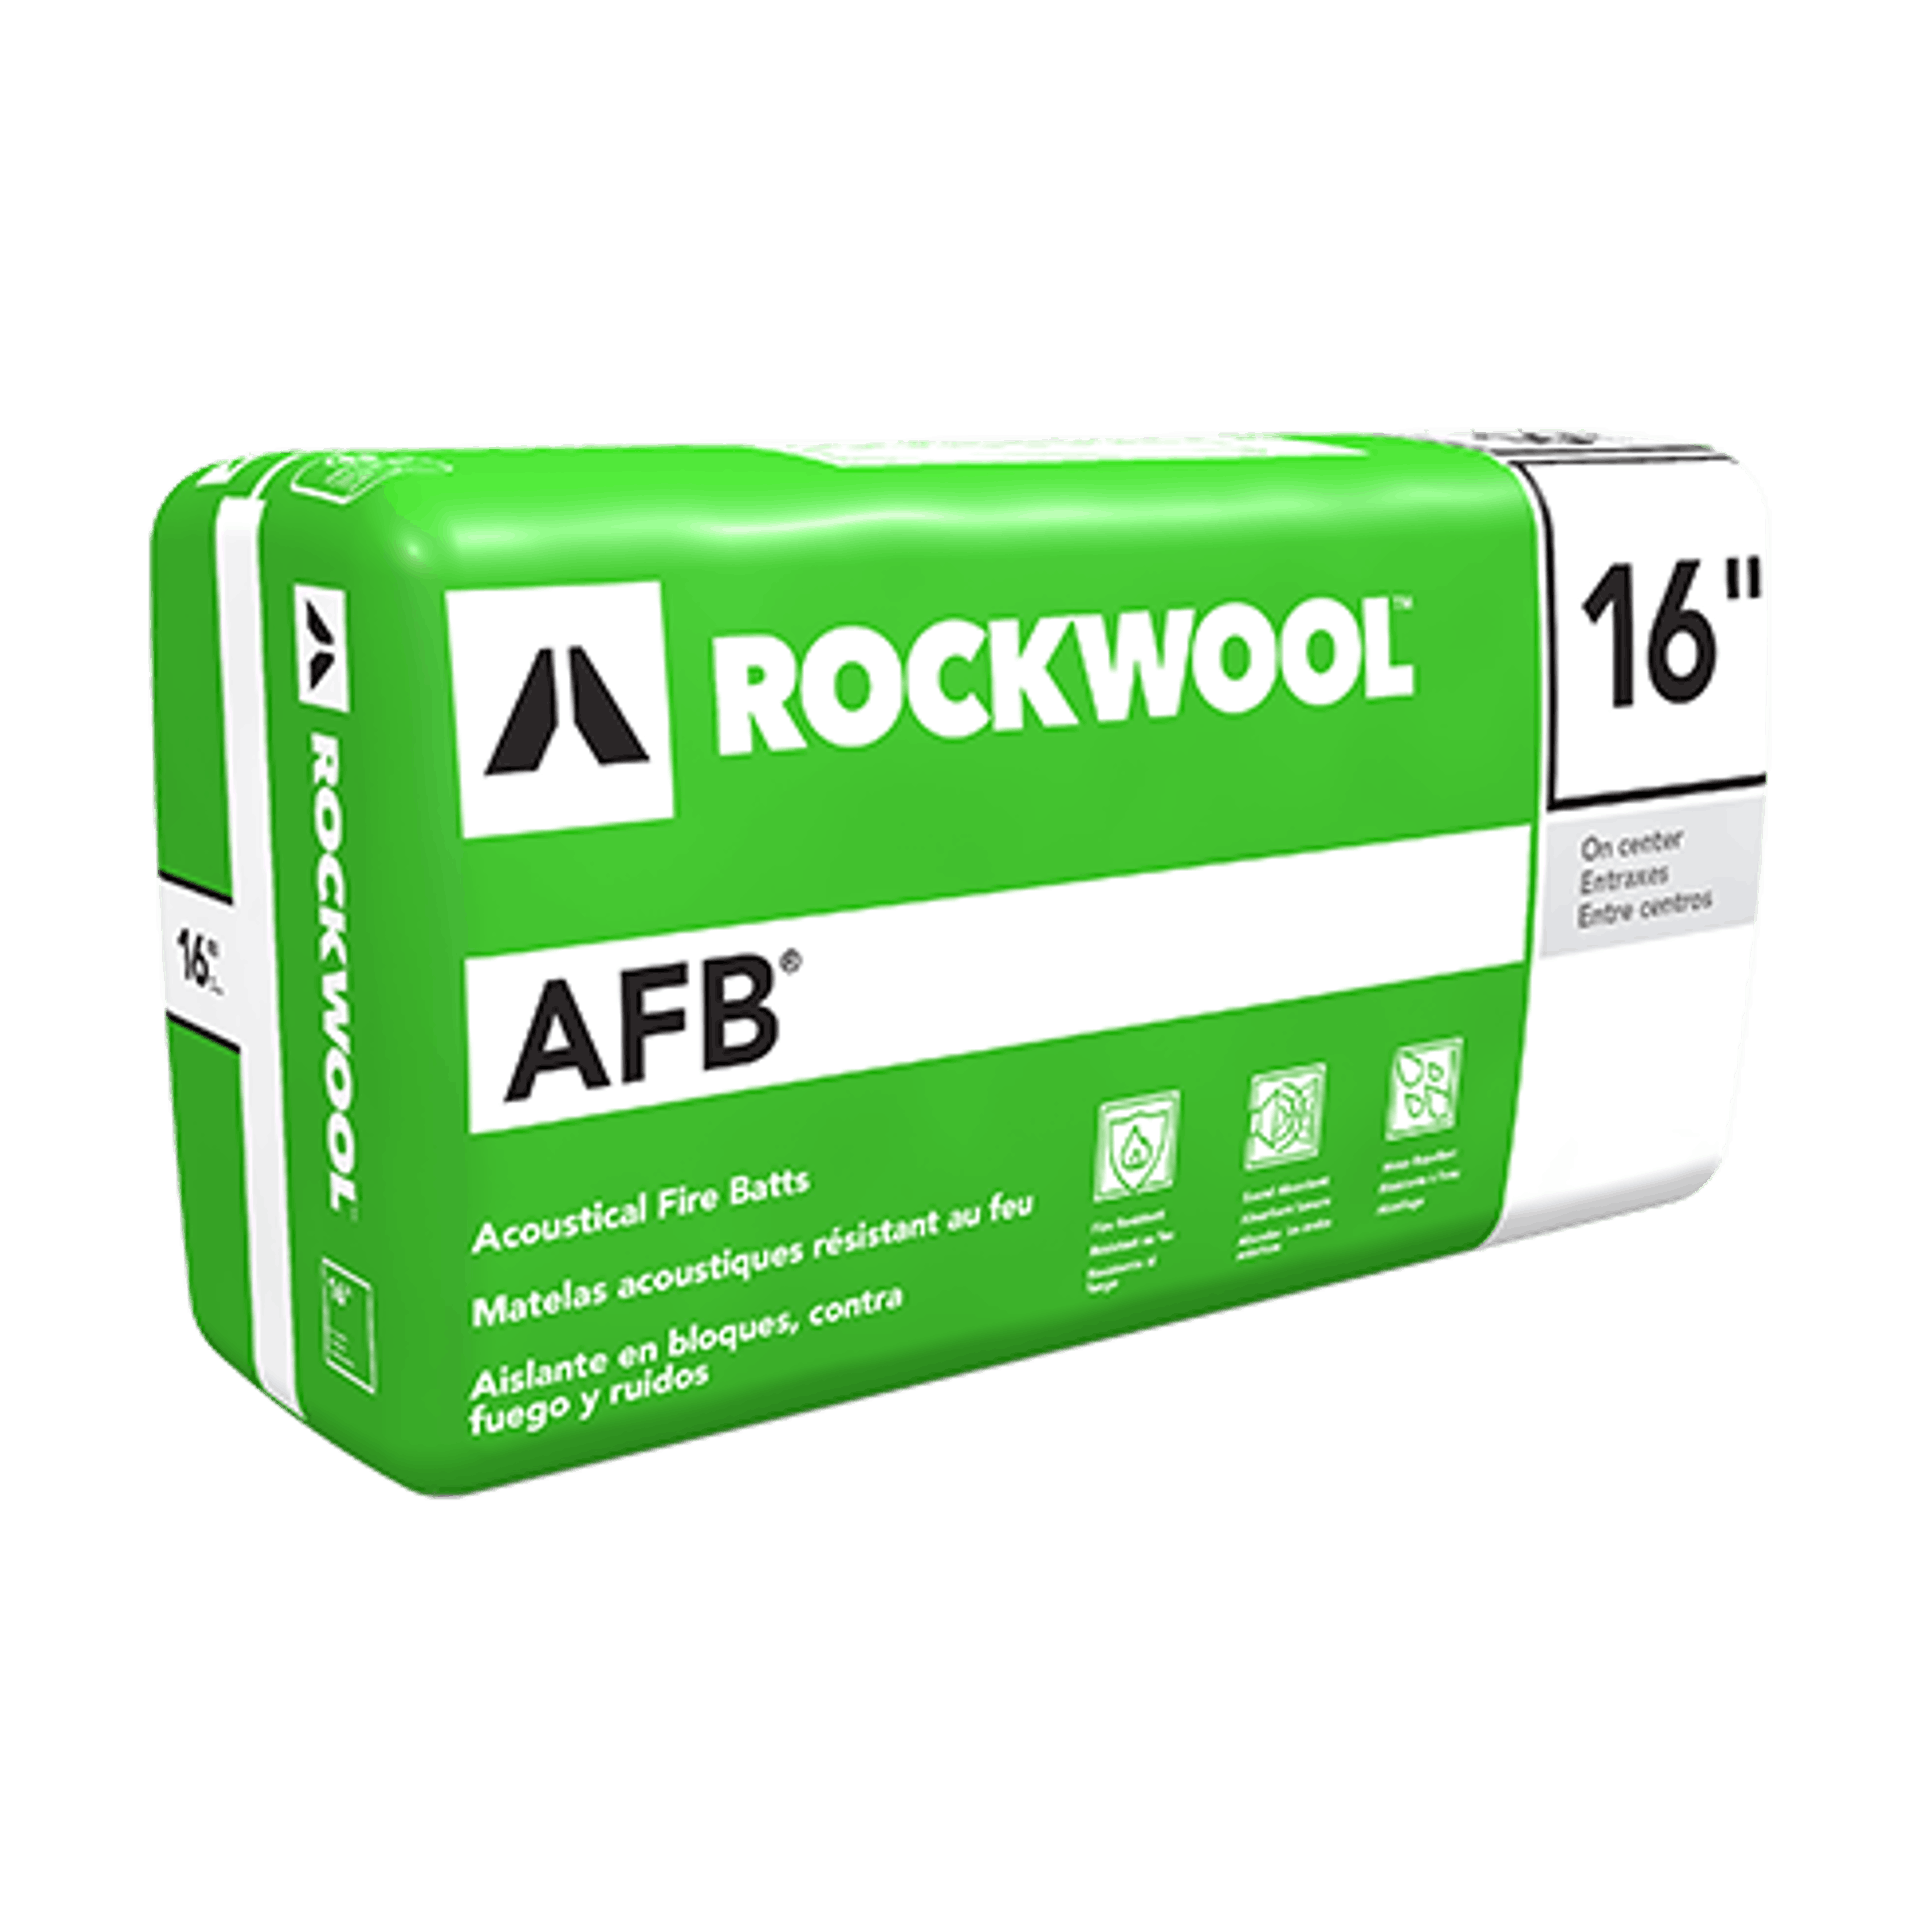 AFB lightweight, semi-rigid batt insulation for steel stud interior wall and floor applications